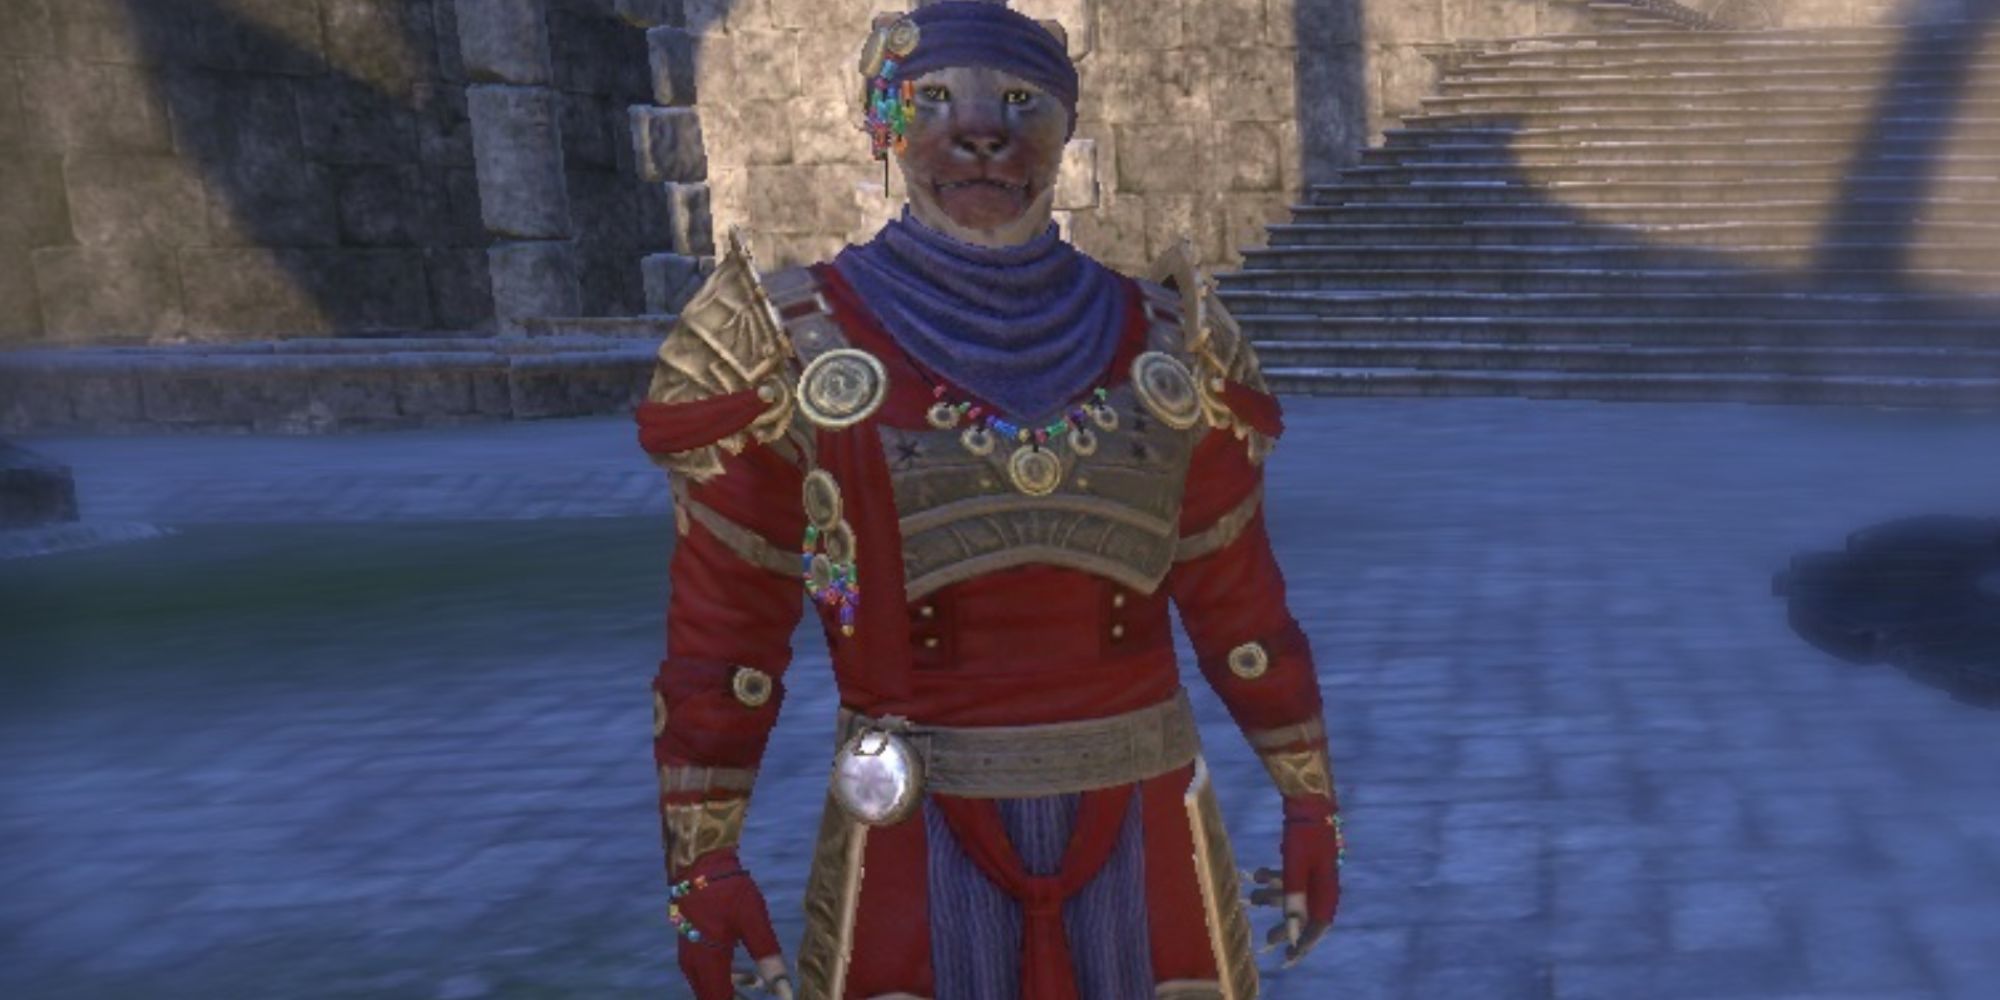 ESO Character Wearing The Zaji Dragonguard Uniform